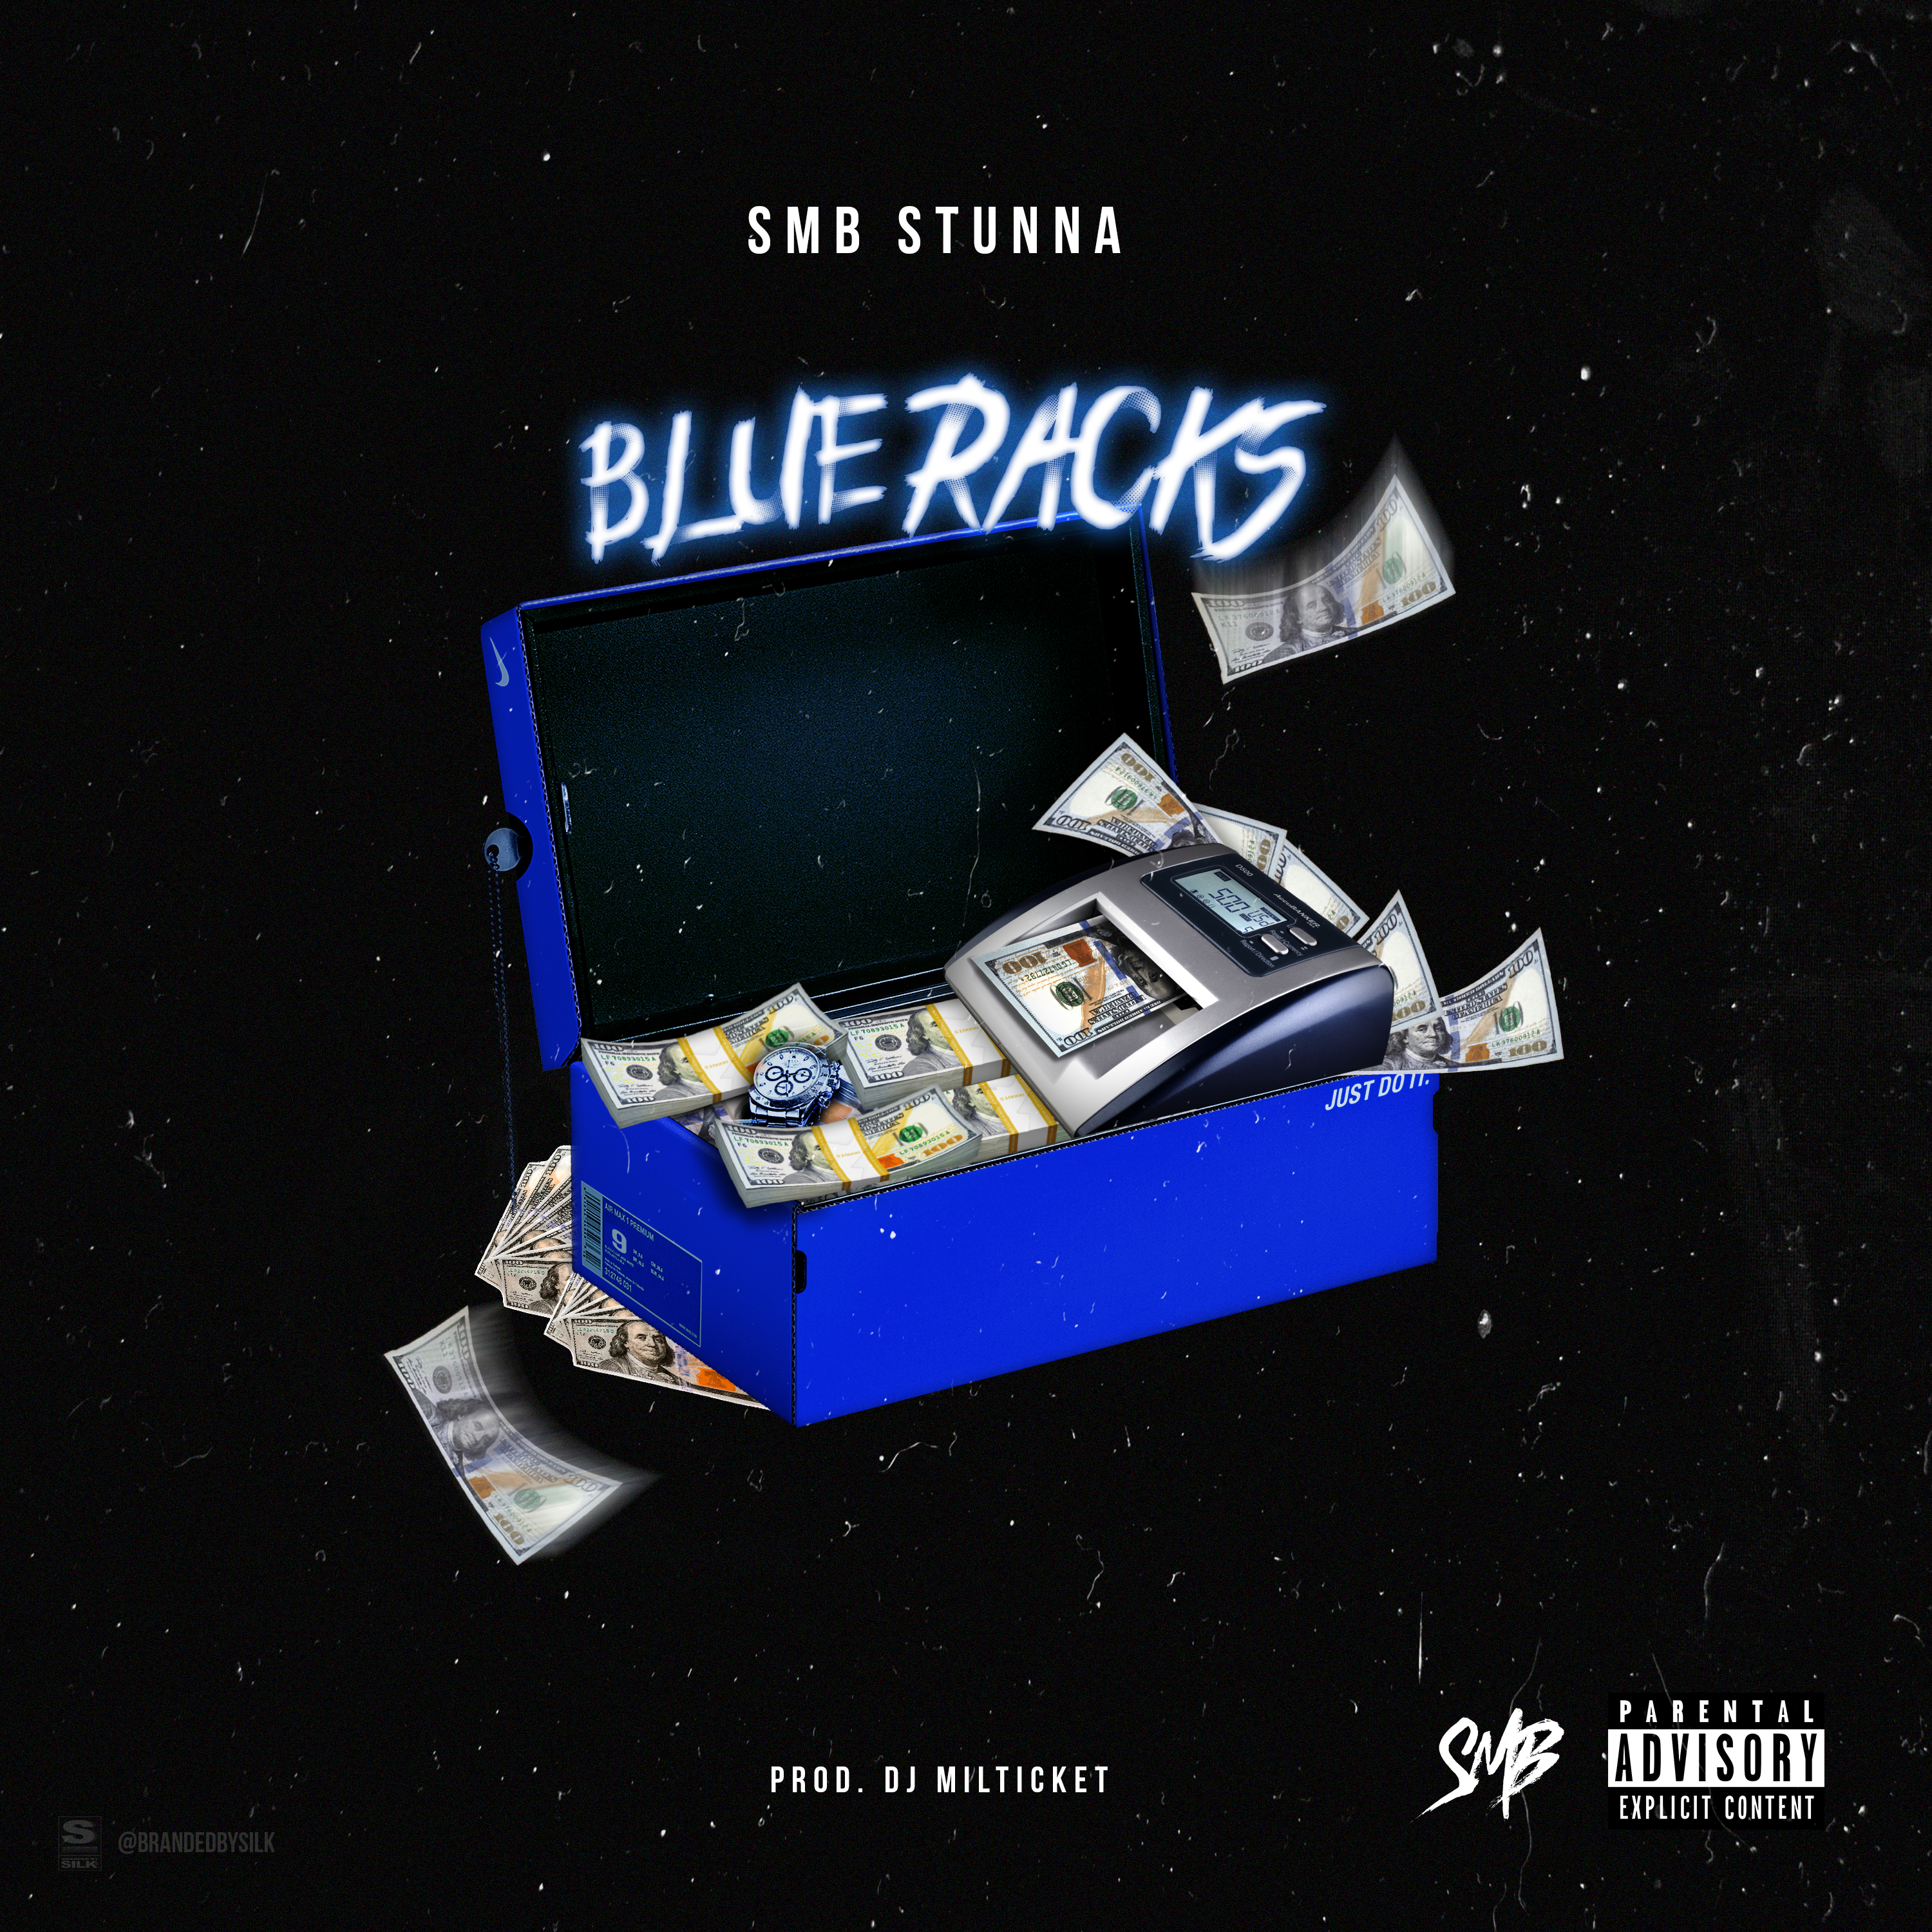 SMB Stunna & DJ Milticket Release “Blue Racks” Single [AUDIO STREAM]